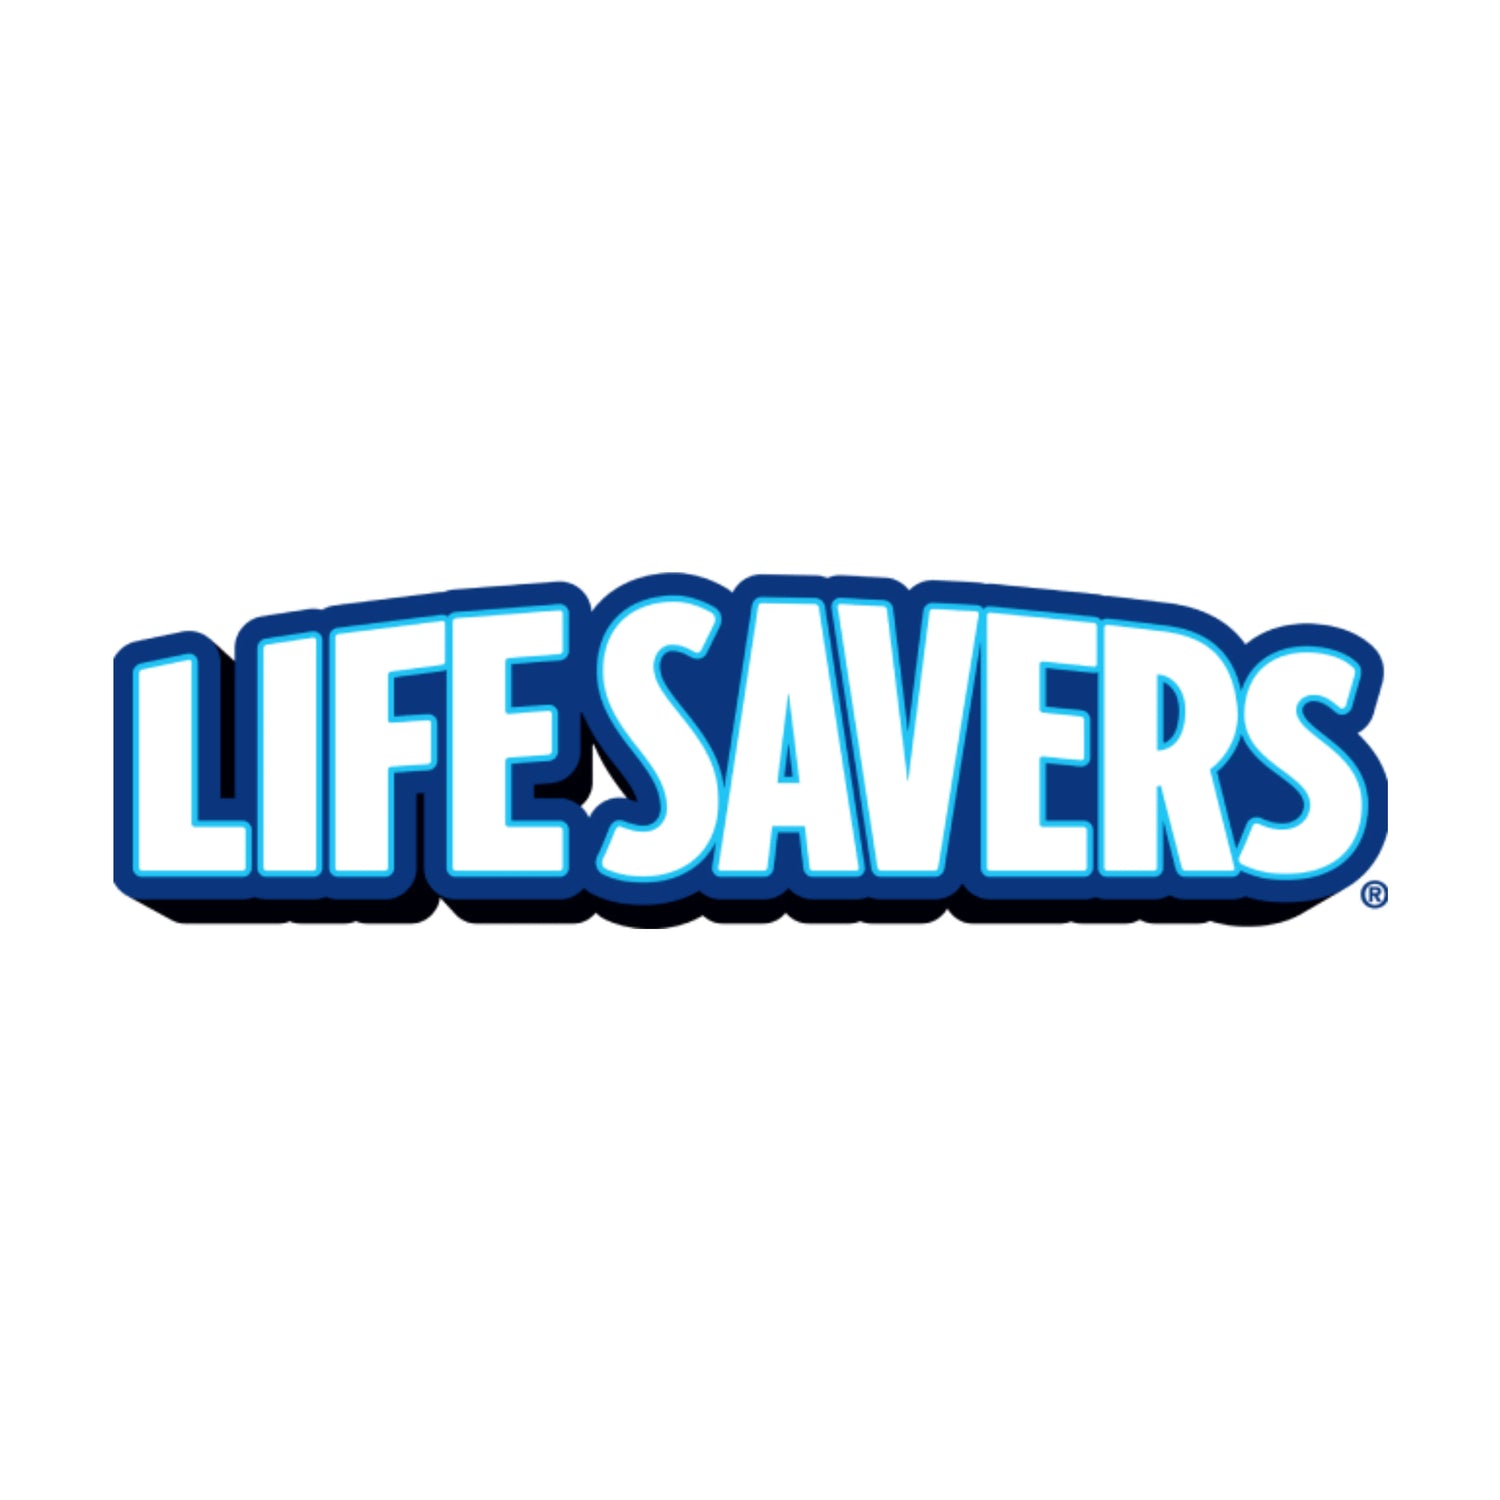 Lifesavers